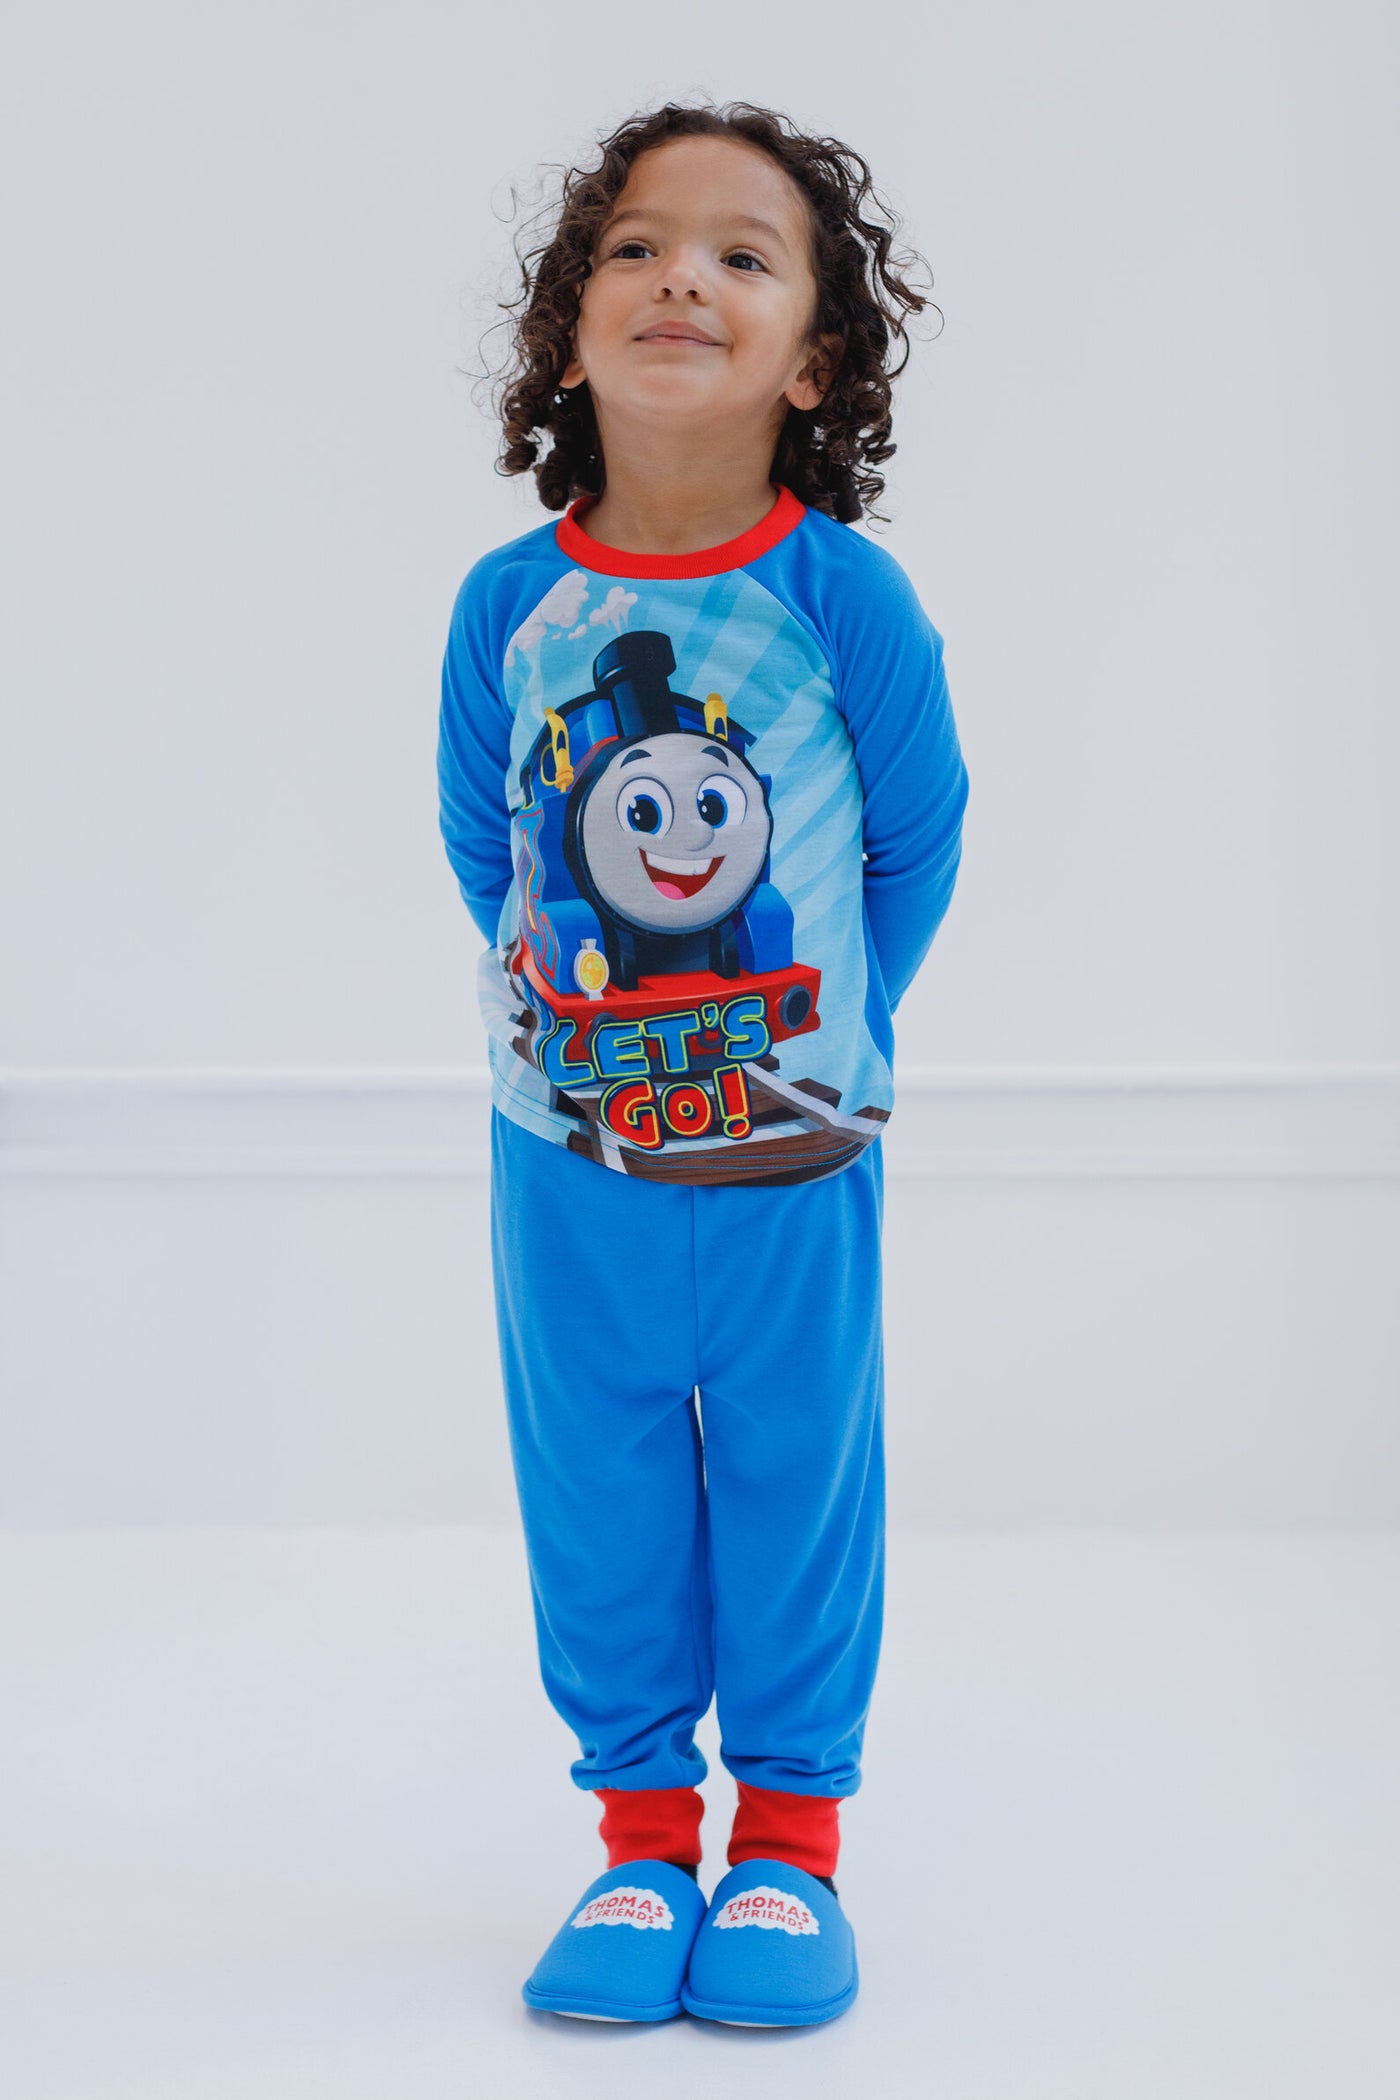 Thomas & Friends Pajama Shirt Pants and Slippers 3 Piece